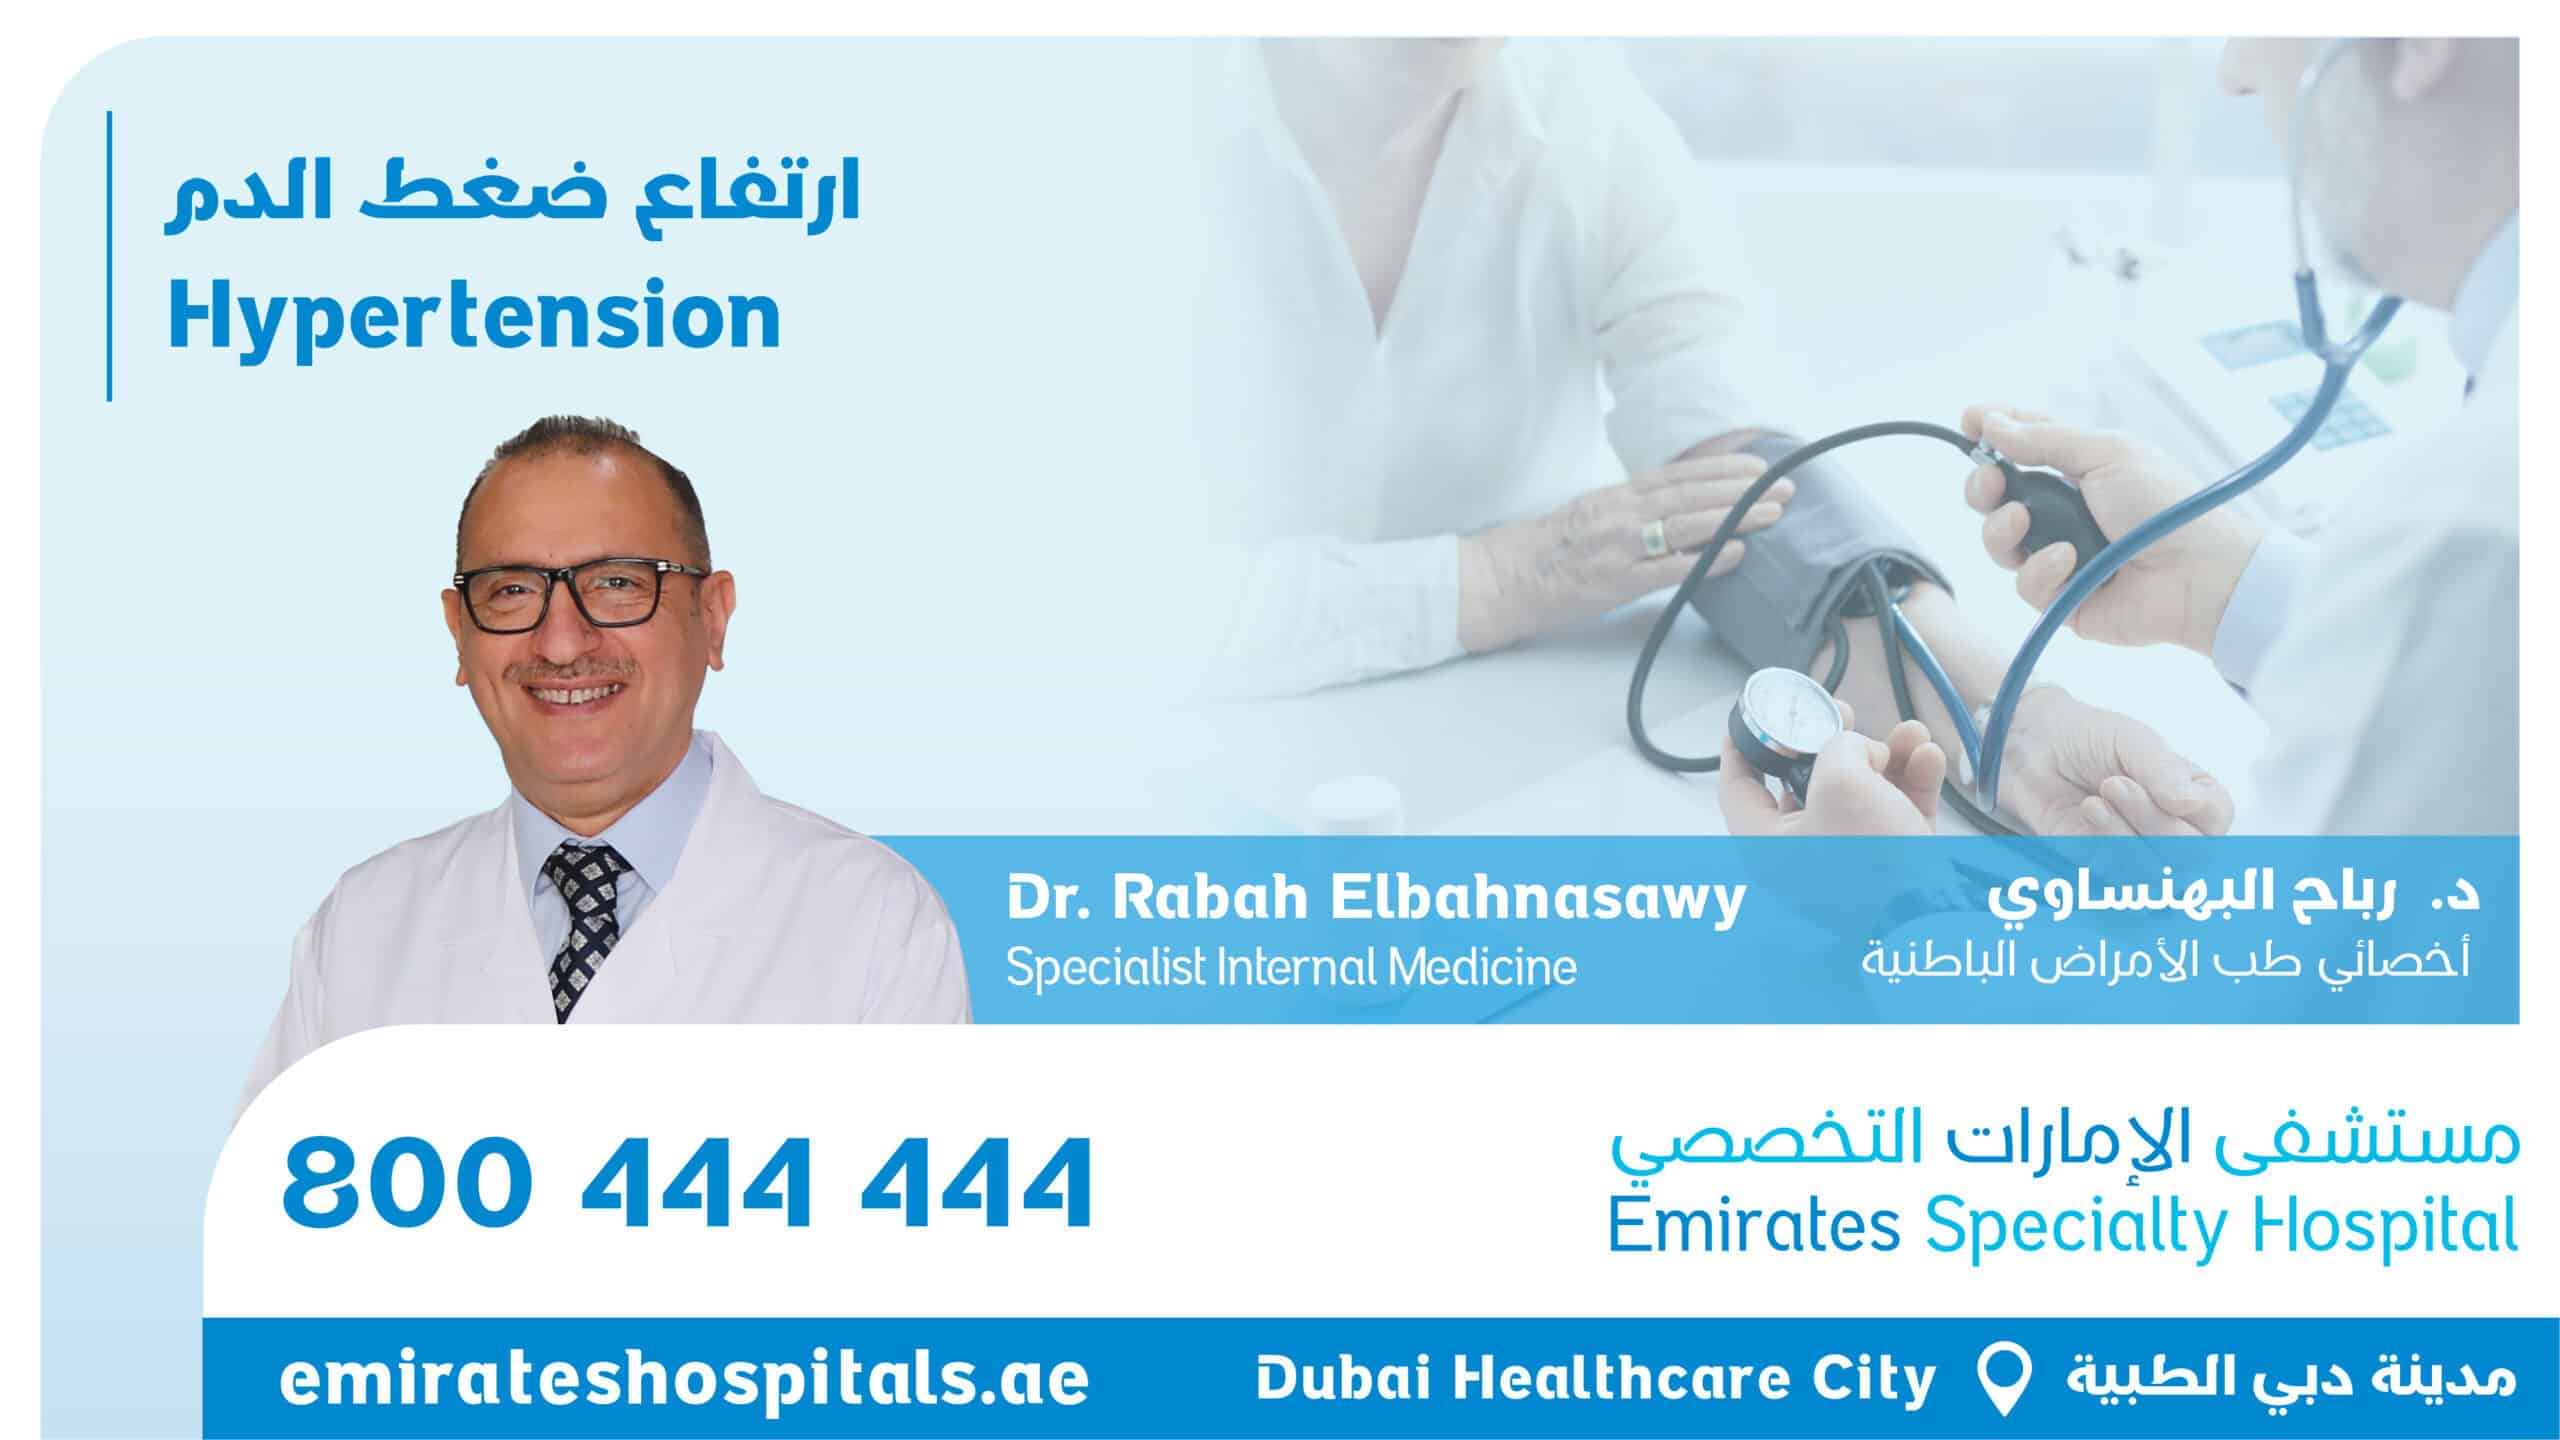 Hypertension - | Dr. Sherif Shaker, Specialist Cardiologist